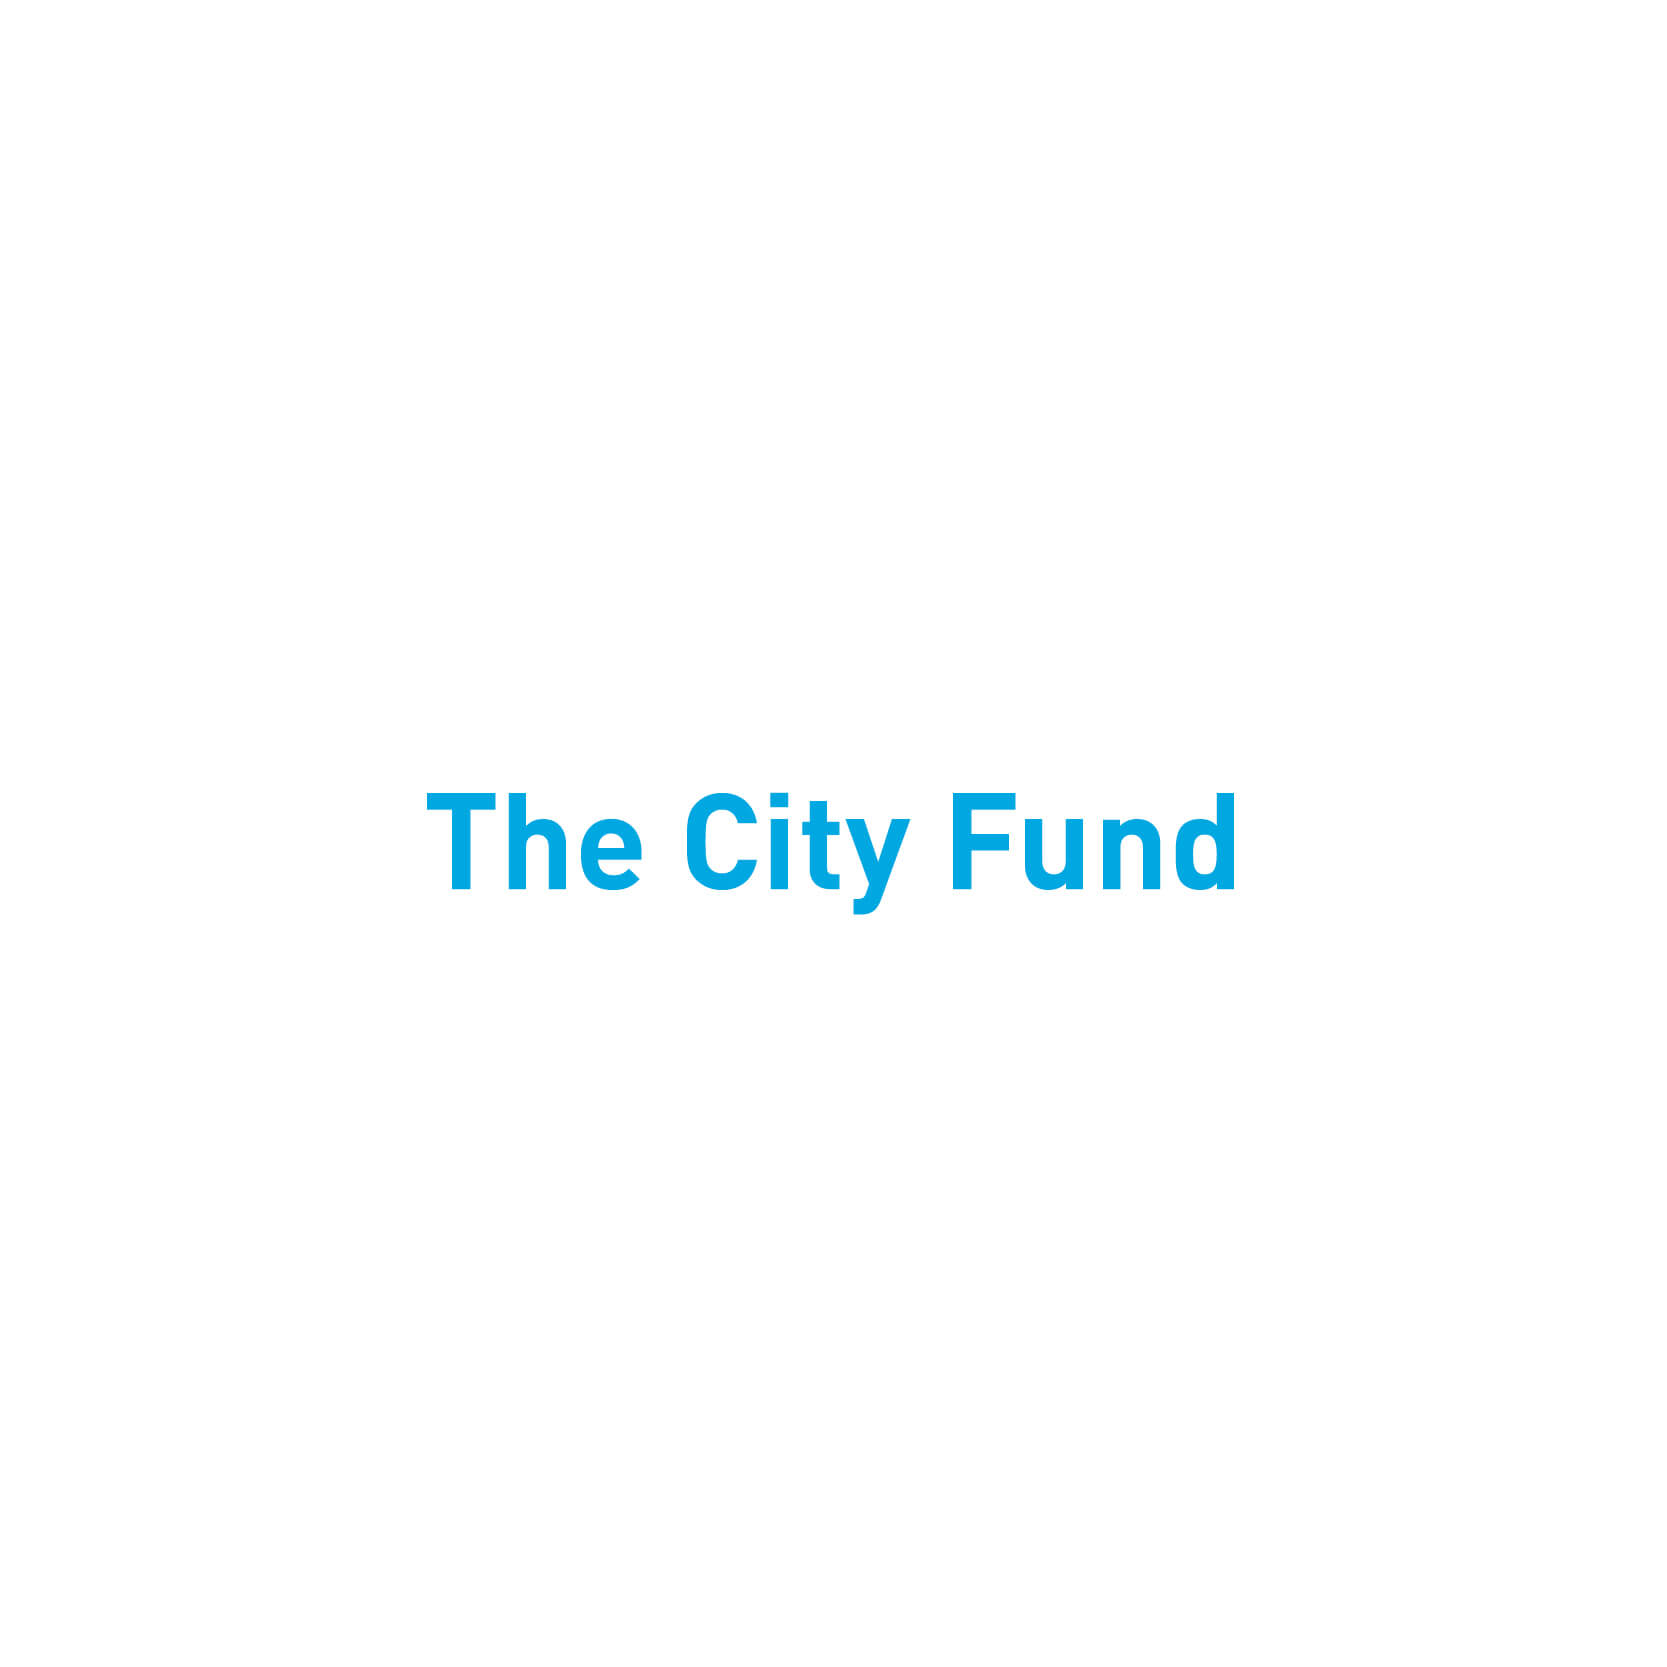 The City Fund